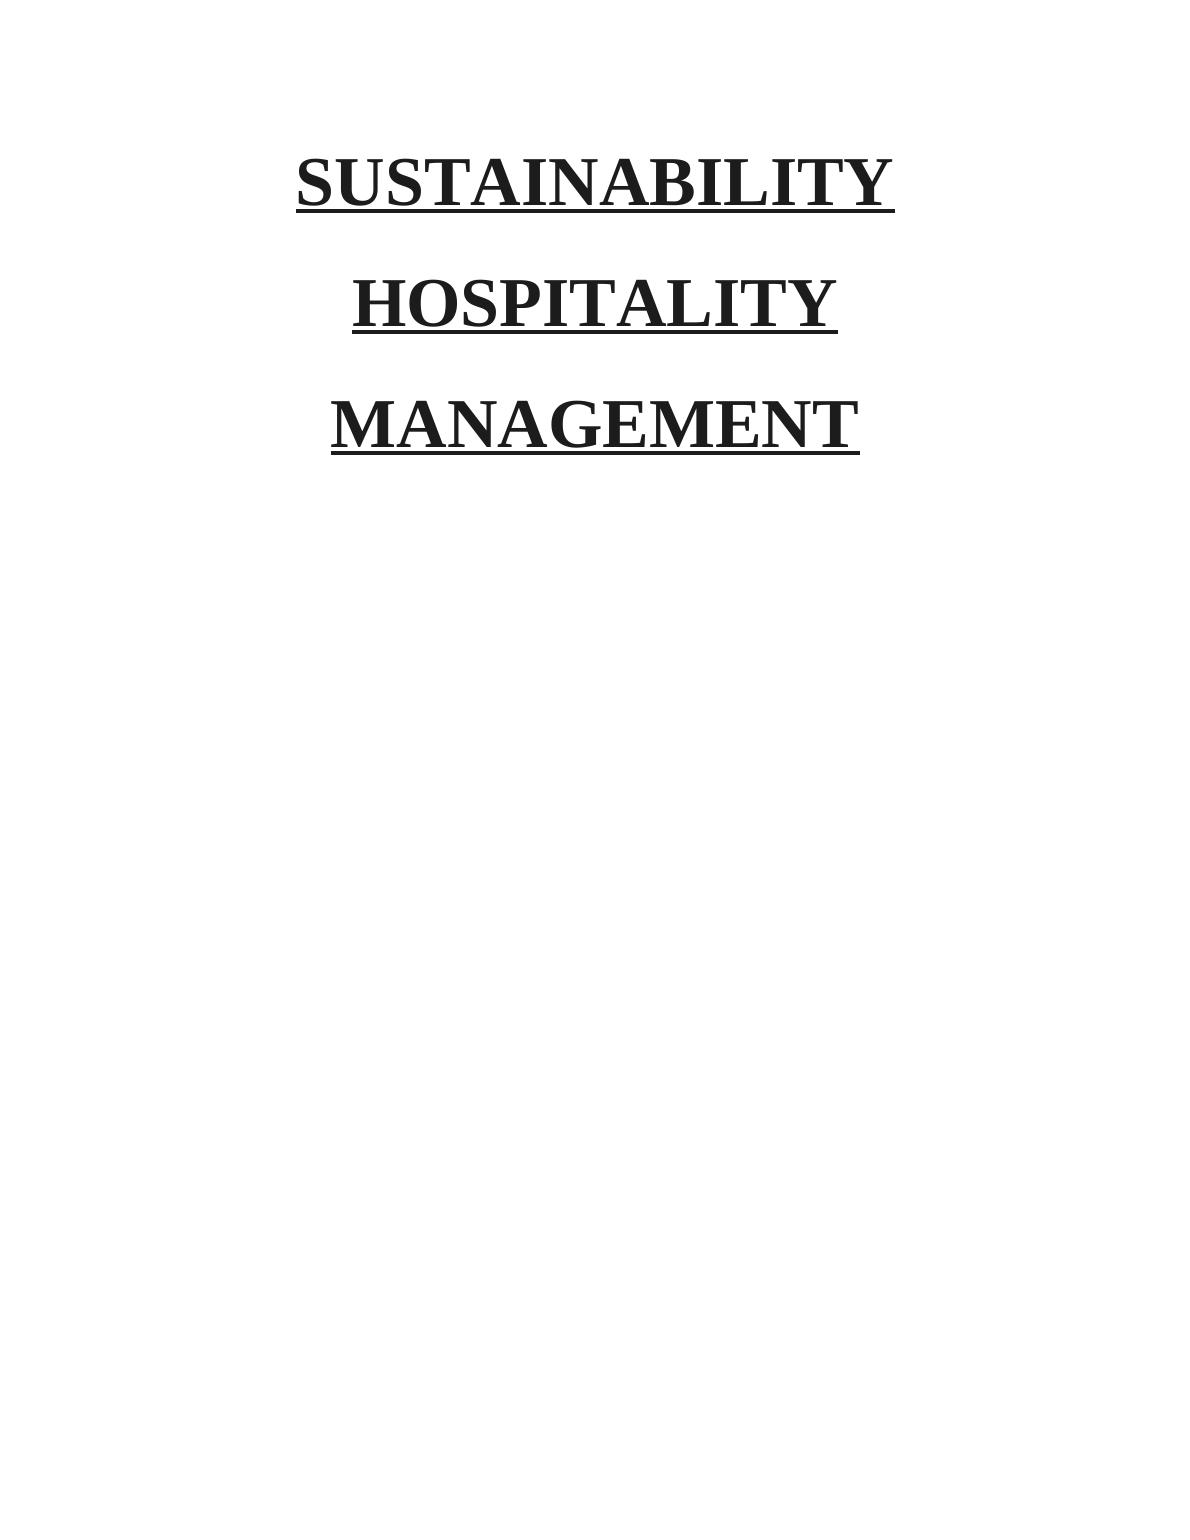 Sustainability Hospitality Management : Assignment_1